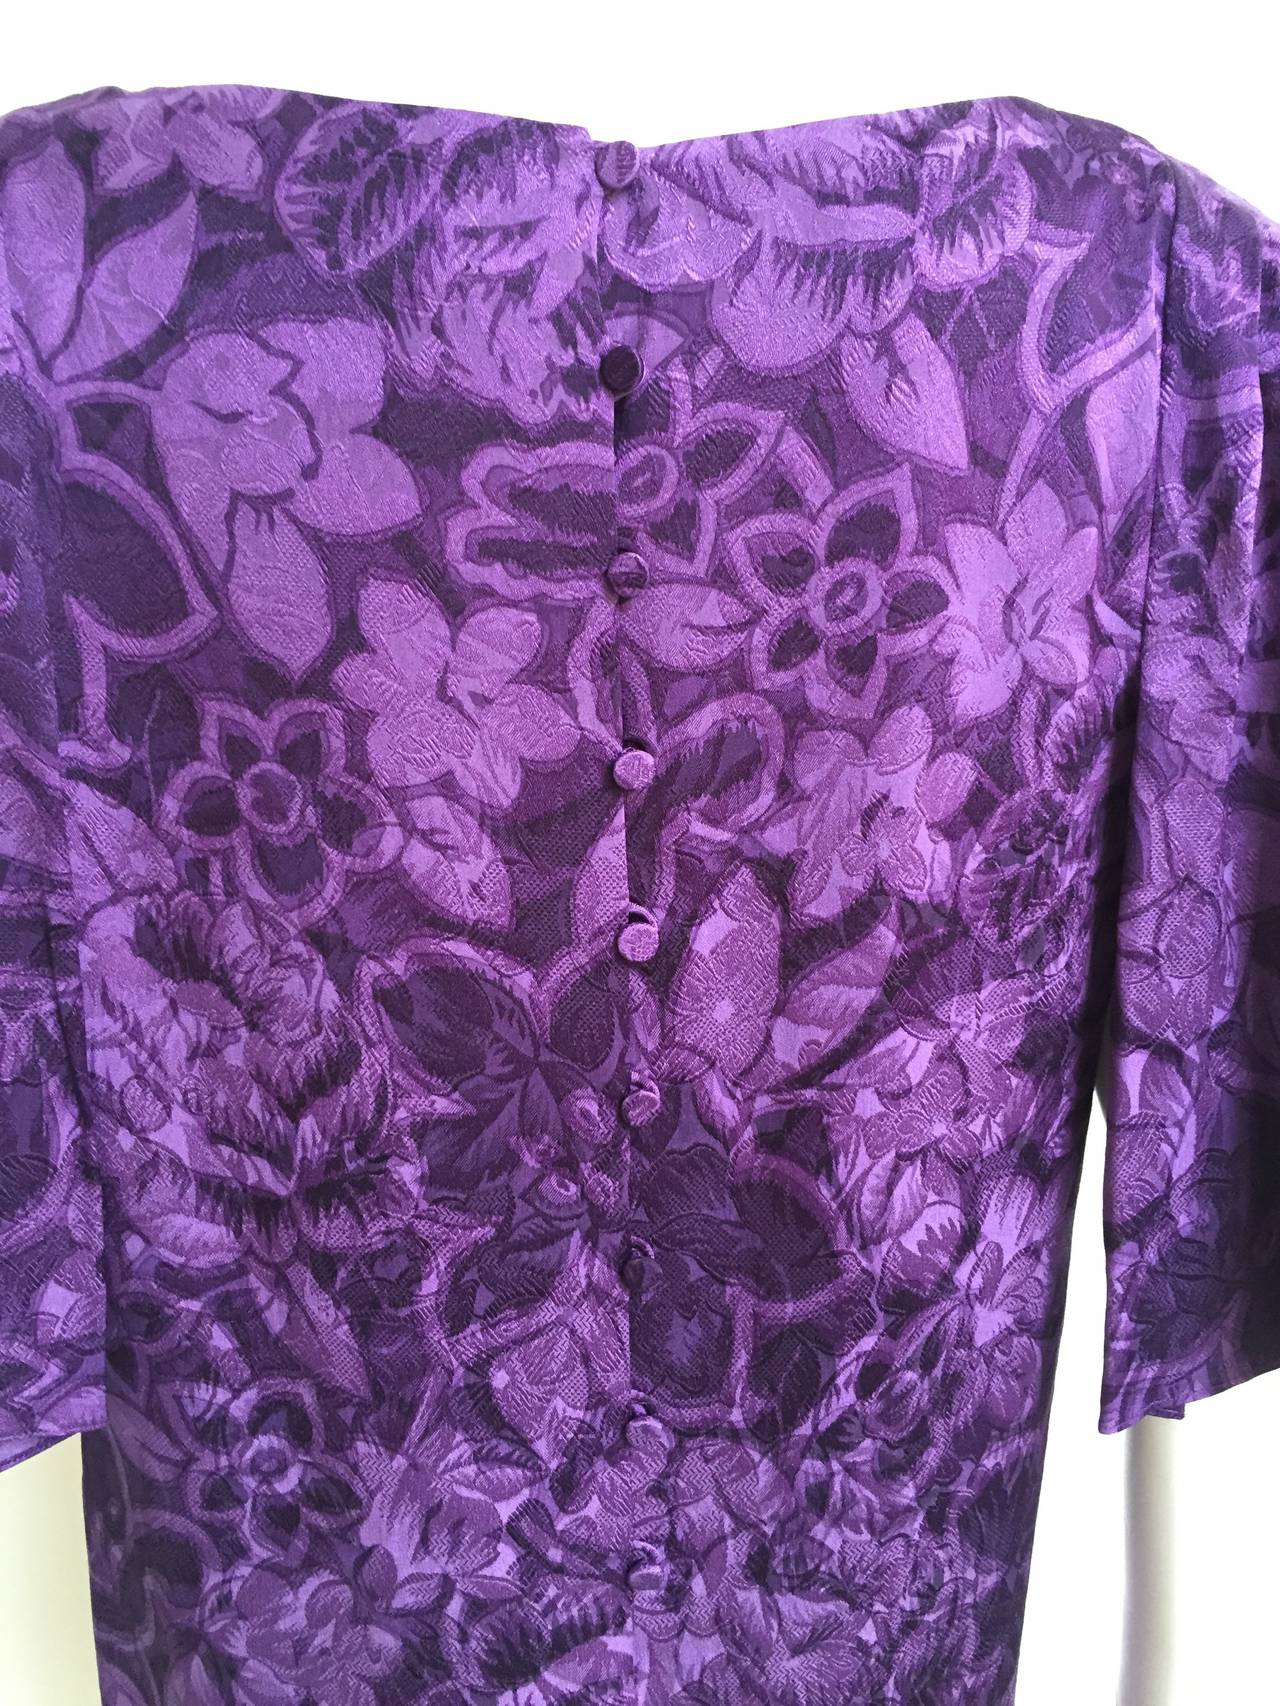 Women's Hanae Mori for Neiman Marcus 80s floral silk dress size 8. For Sale